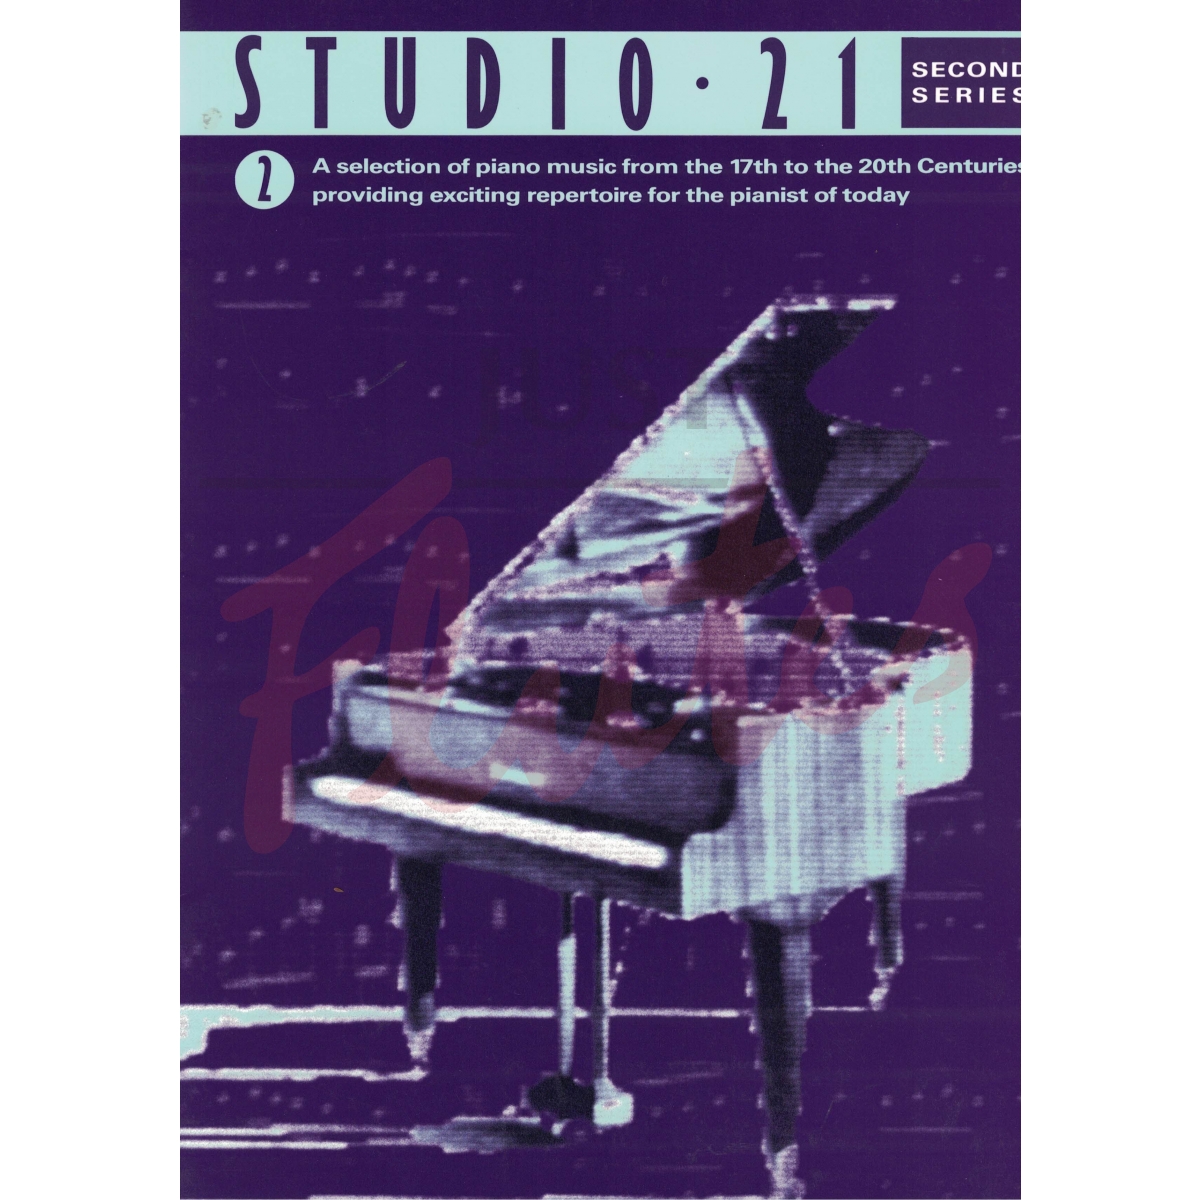 Studio 21 Book 2 2nd Series